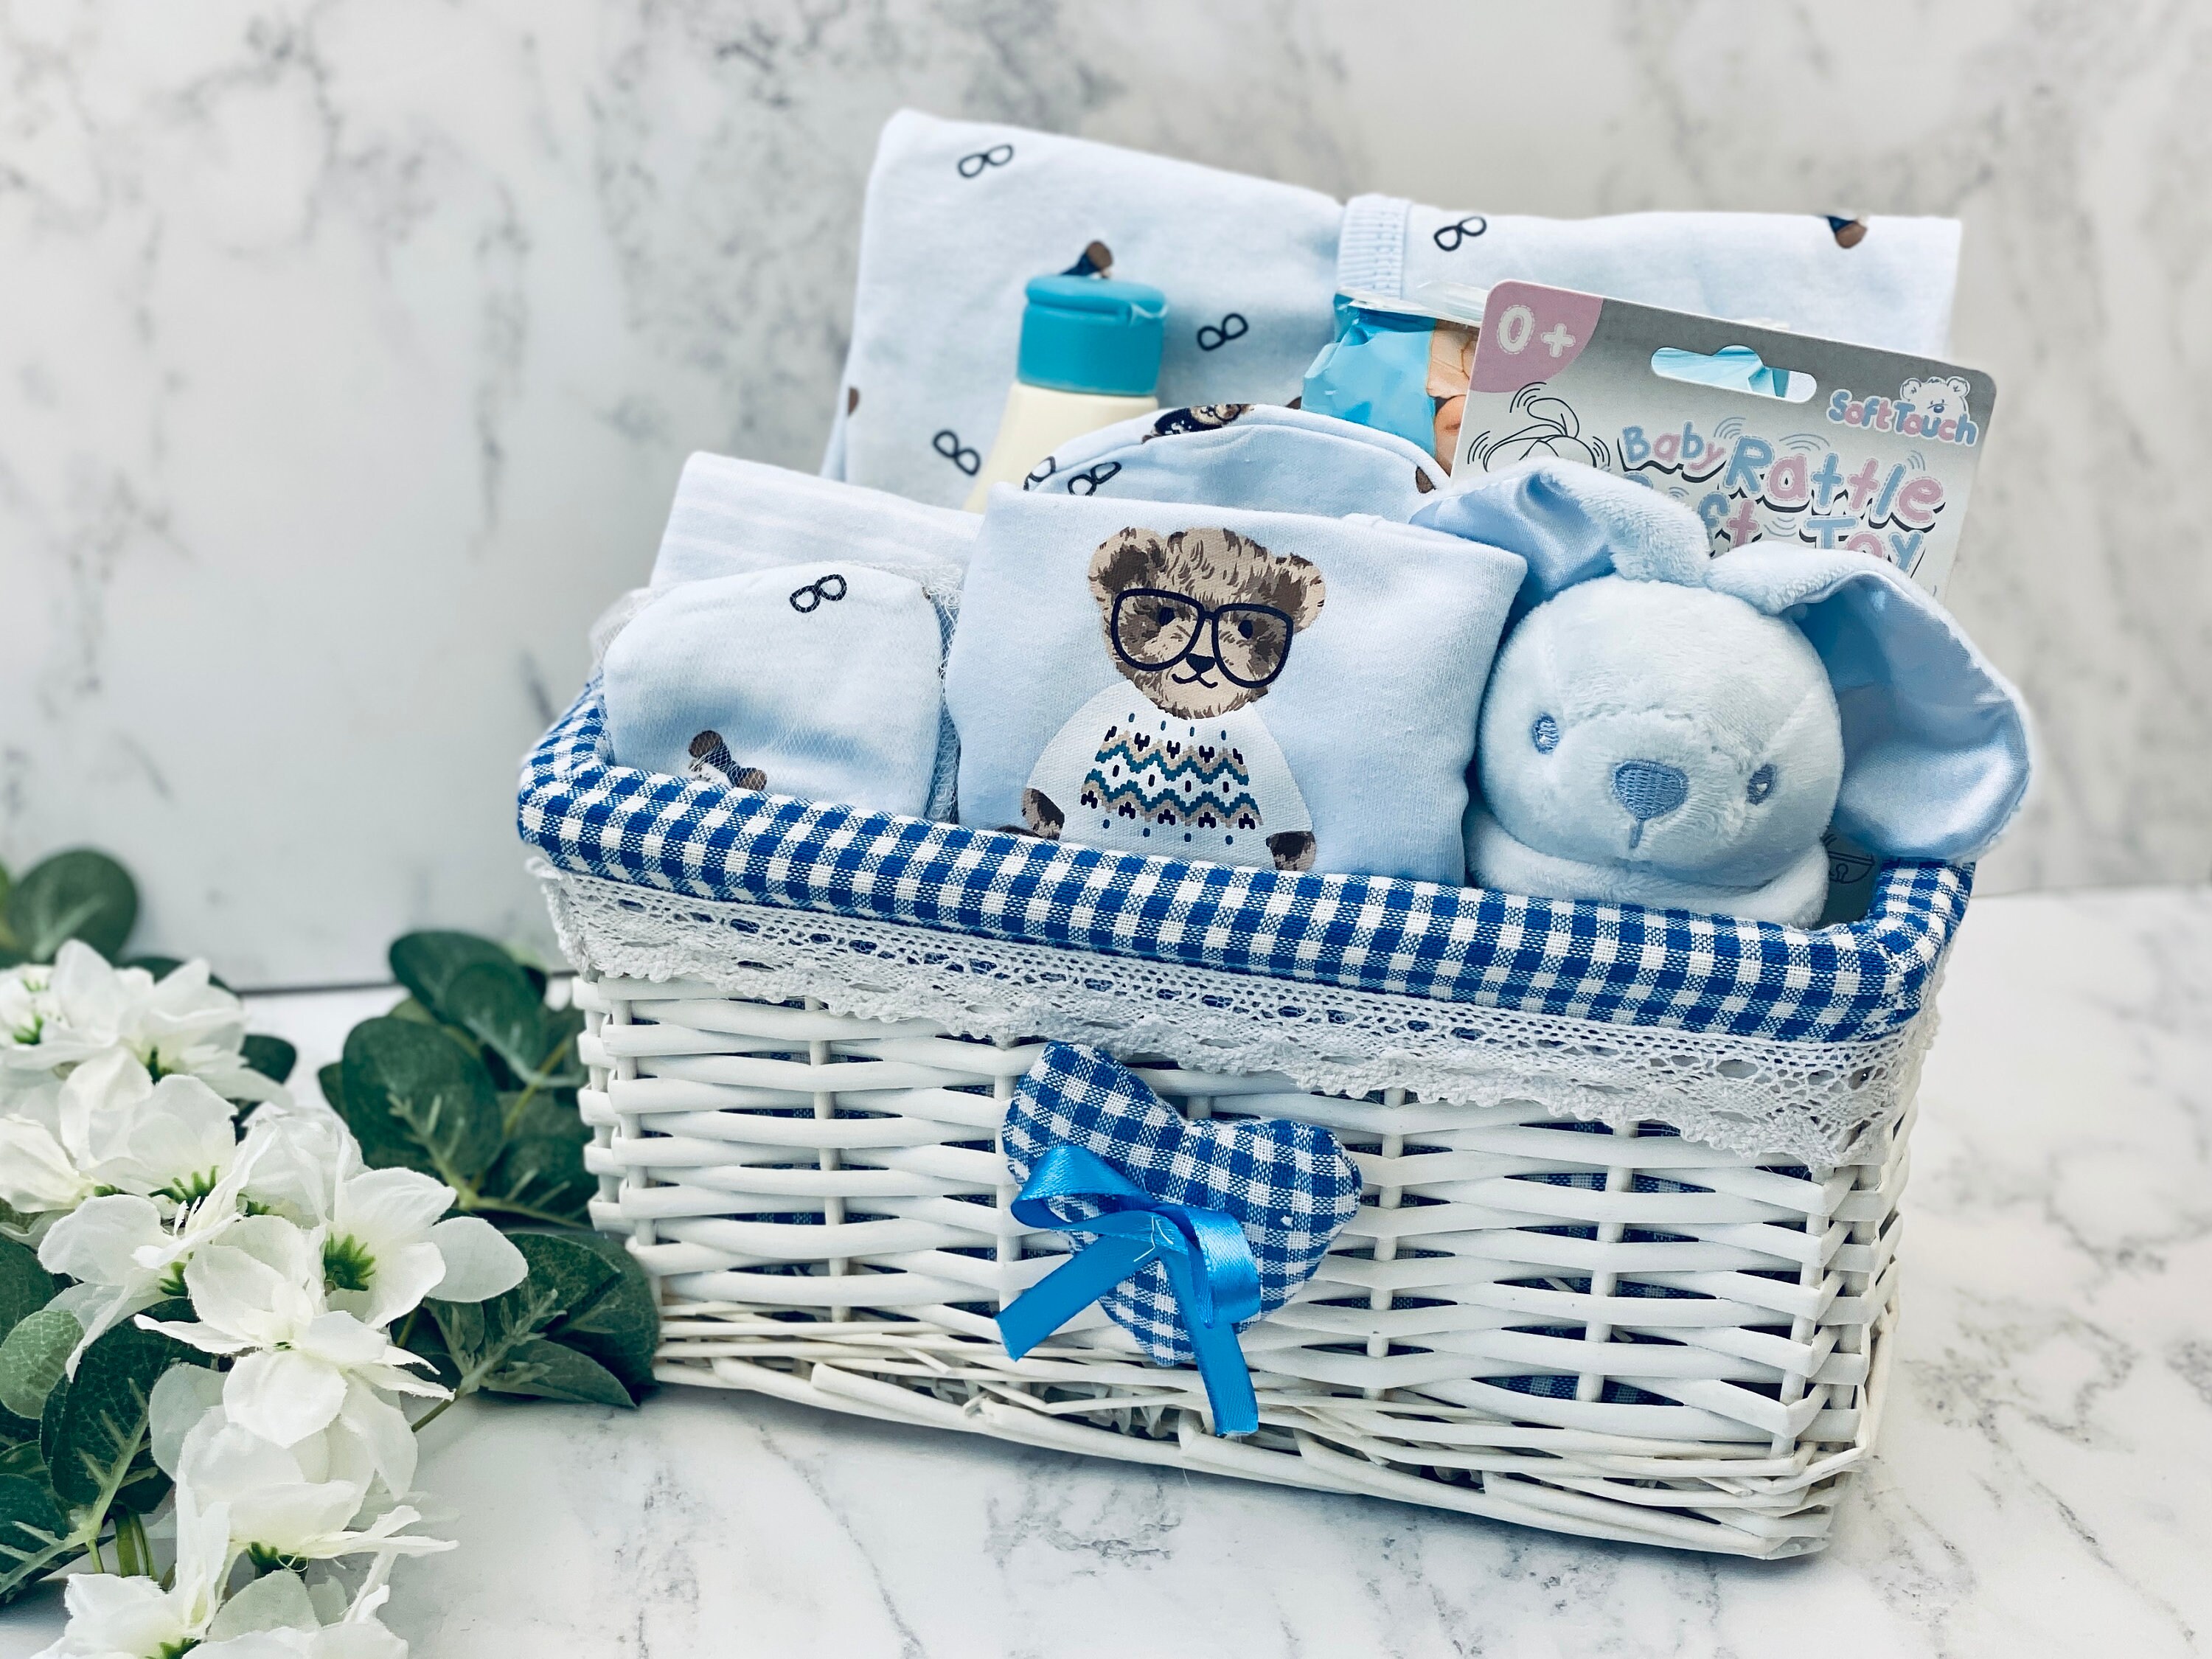  FOREVERPURE Set de regalo para bebé, cesta de regalo